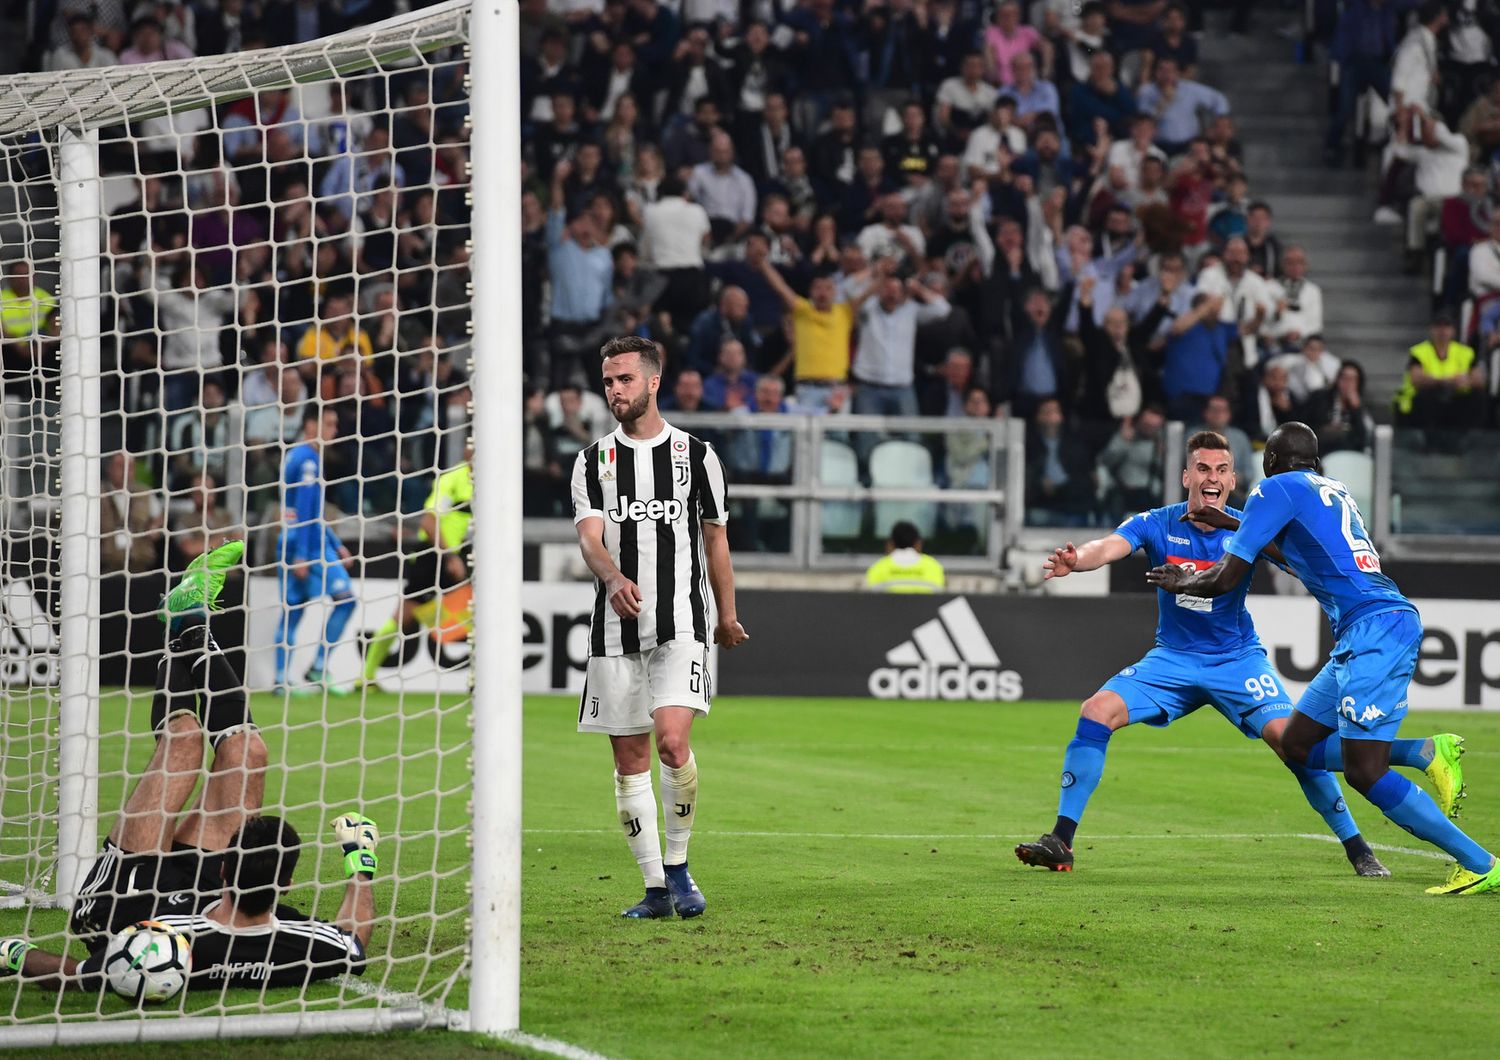 Calcio: Juventus-Napoli&nbsp;0-1, campionato apertissimo, ora le separa un punto